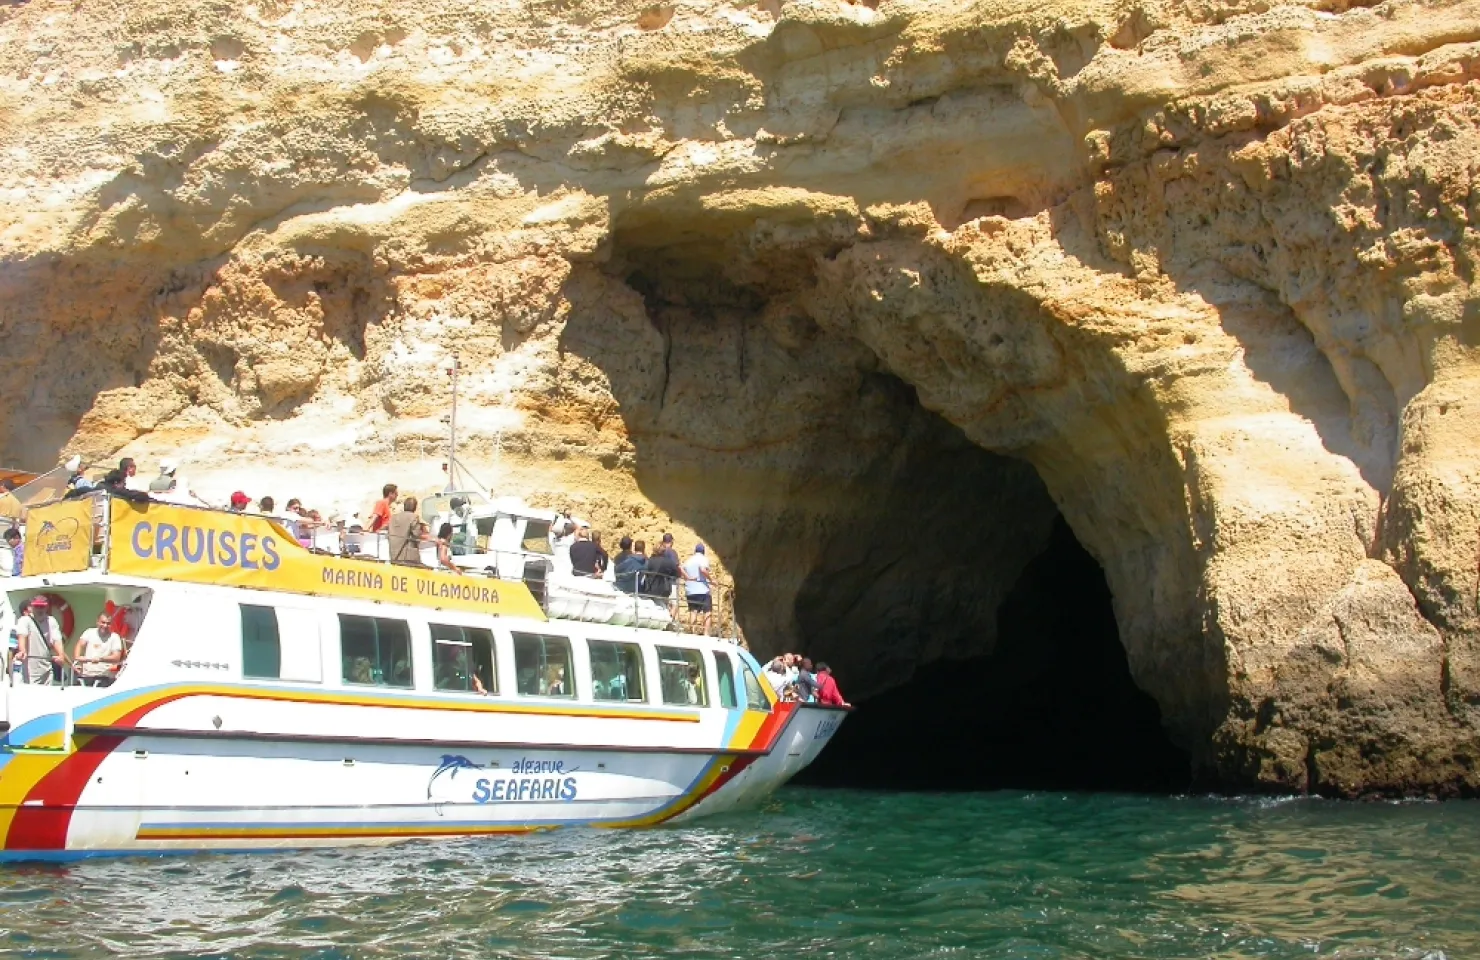 Algarve Sea Cave Tour - Algarve Yacht Cruise